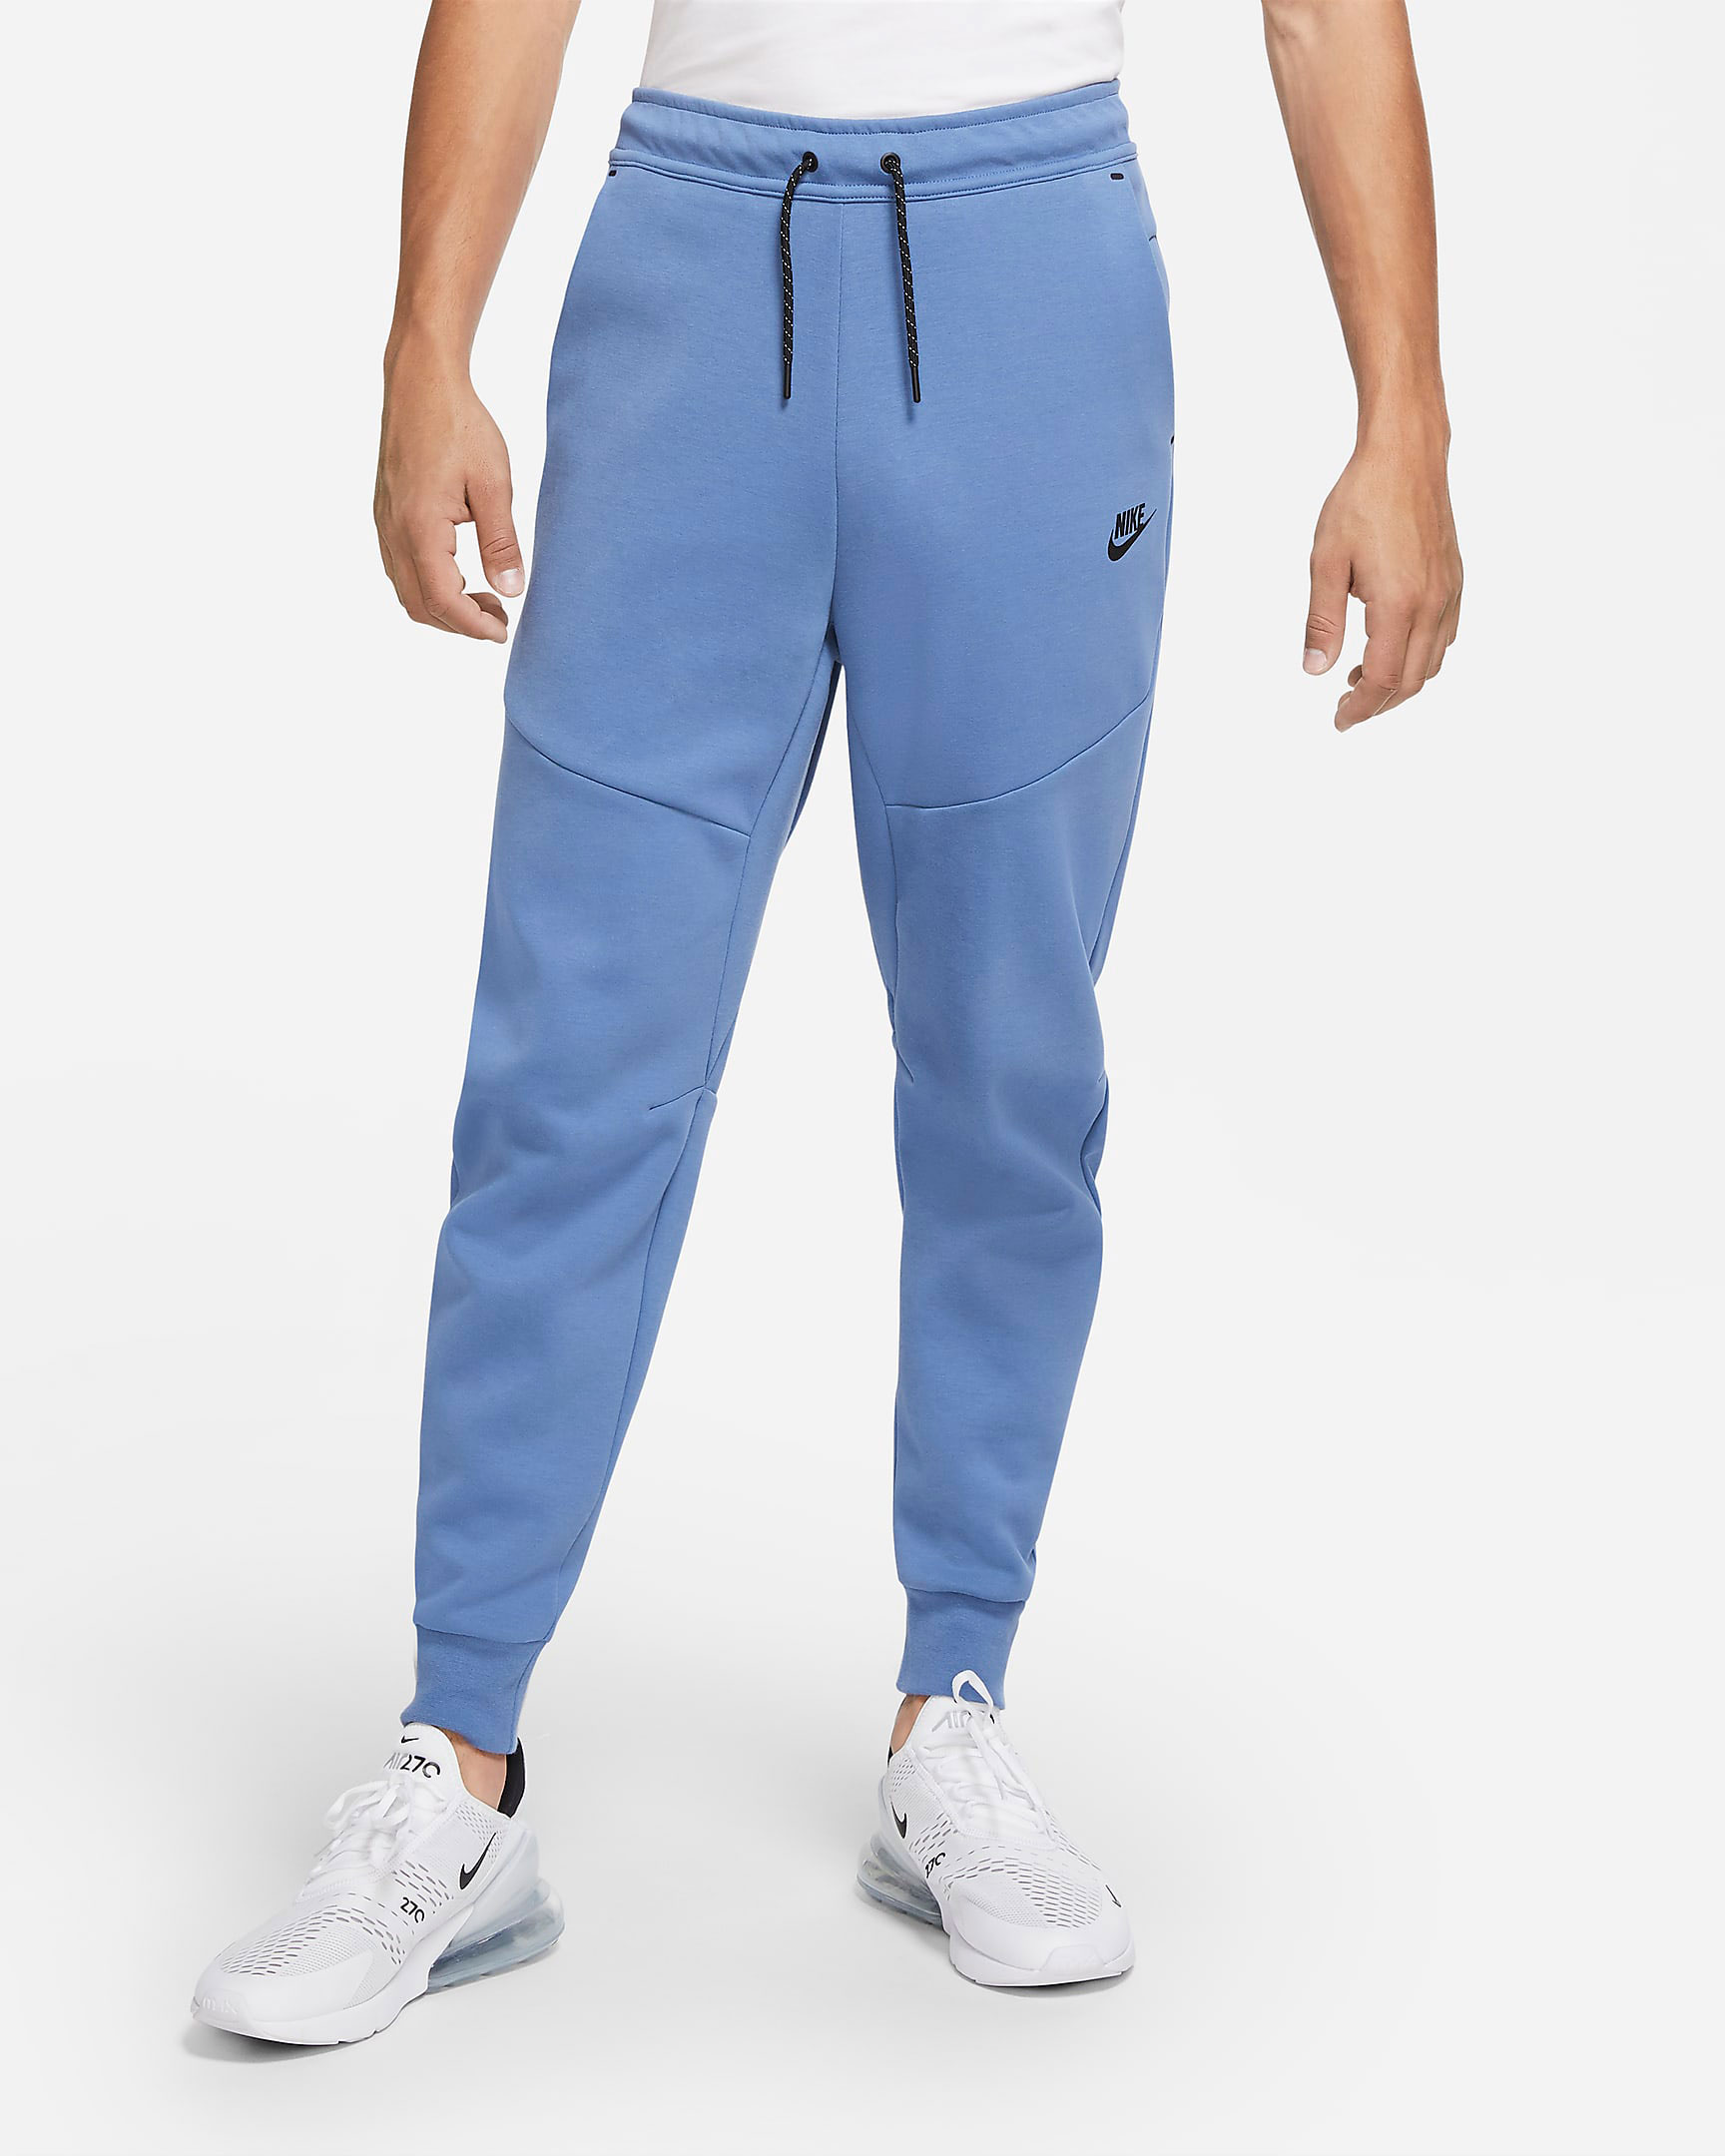 Nike Tech Fleece Jogger Pants for Fall 2020 | SportFits.com